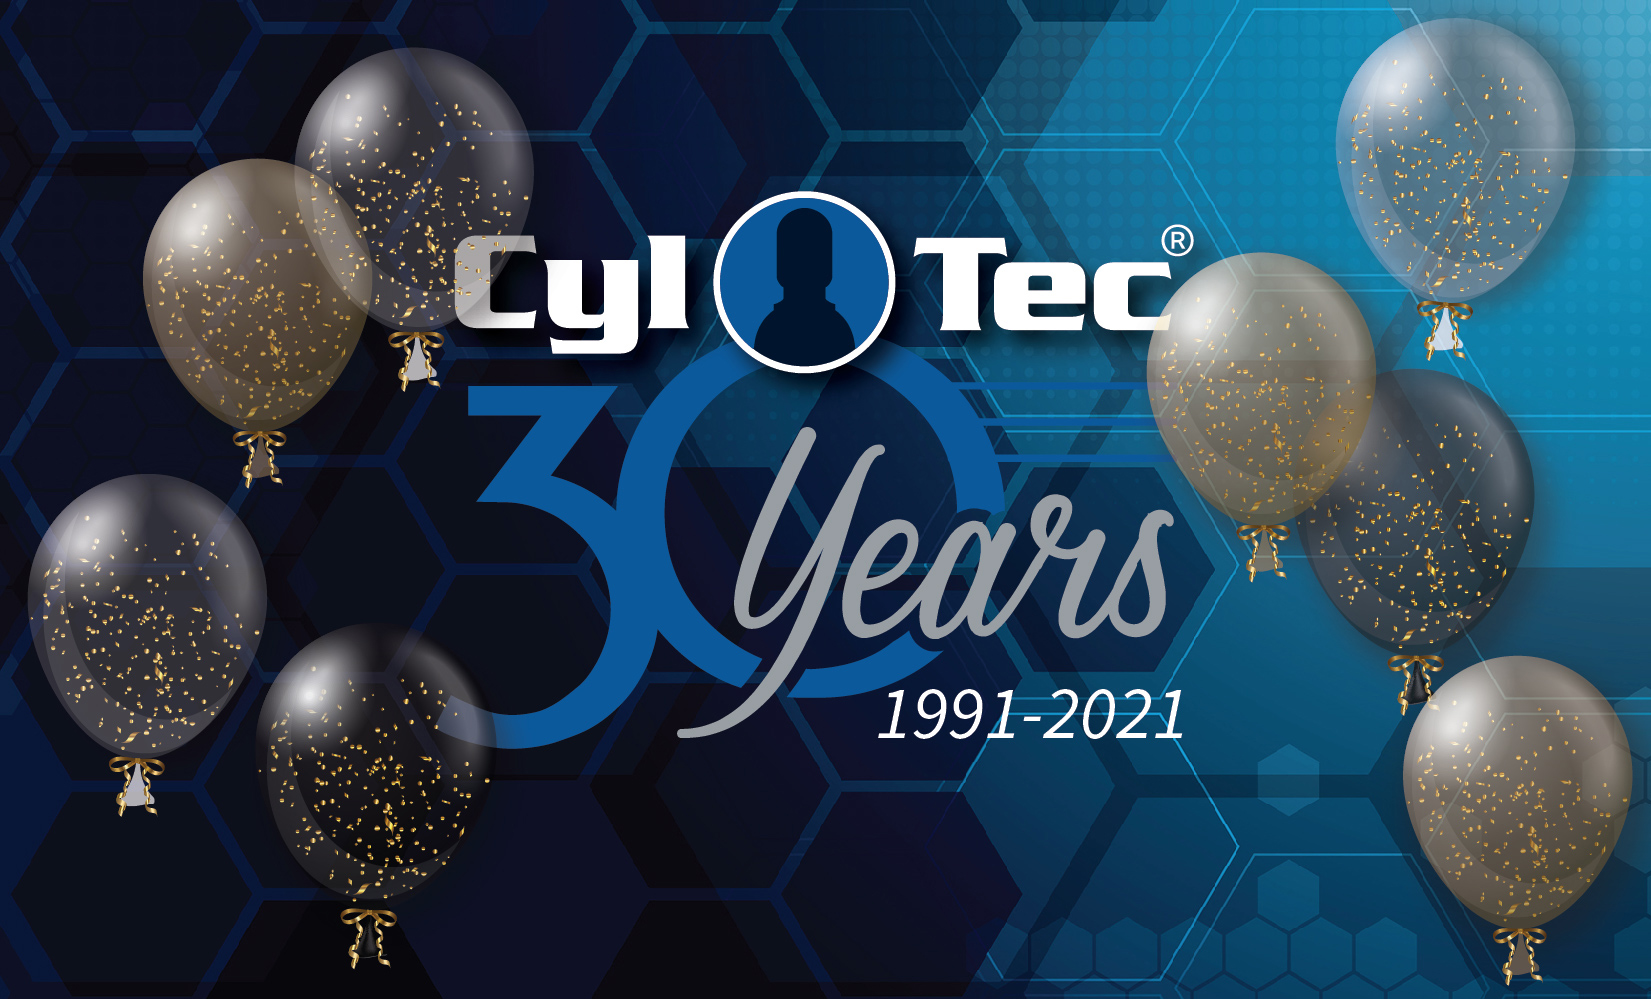 CylTec's 30-Year Anniversary